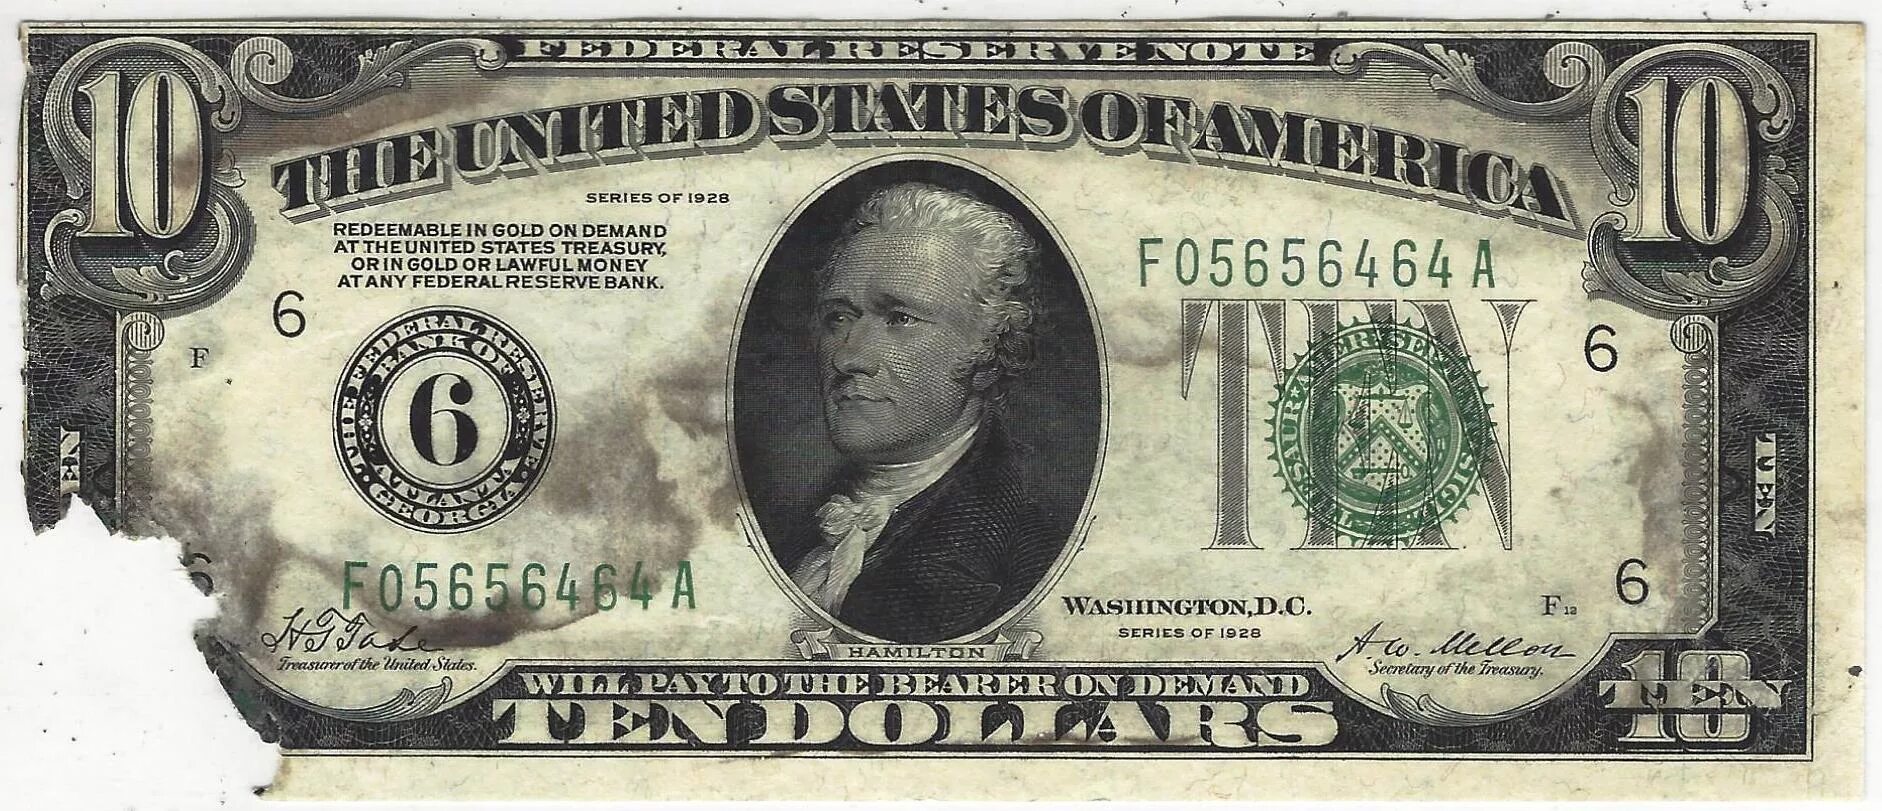 Hamilton 10 долларов. Купюра 10 долларов США. 500 Долларов 1934. Доллар купюра 10 долларах. 10 долларов сша цена